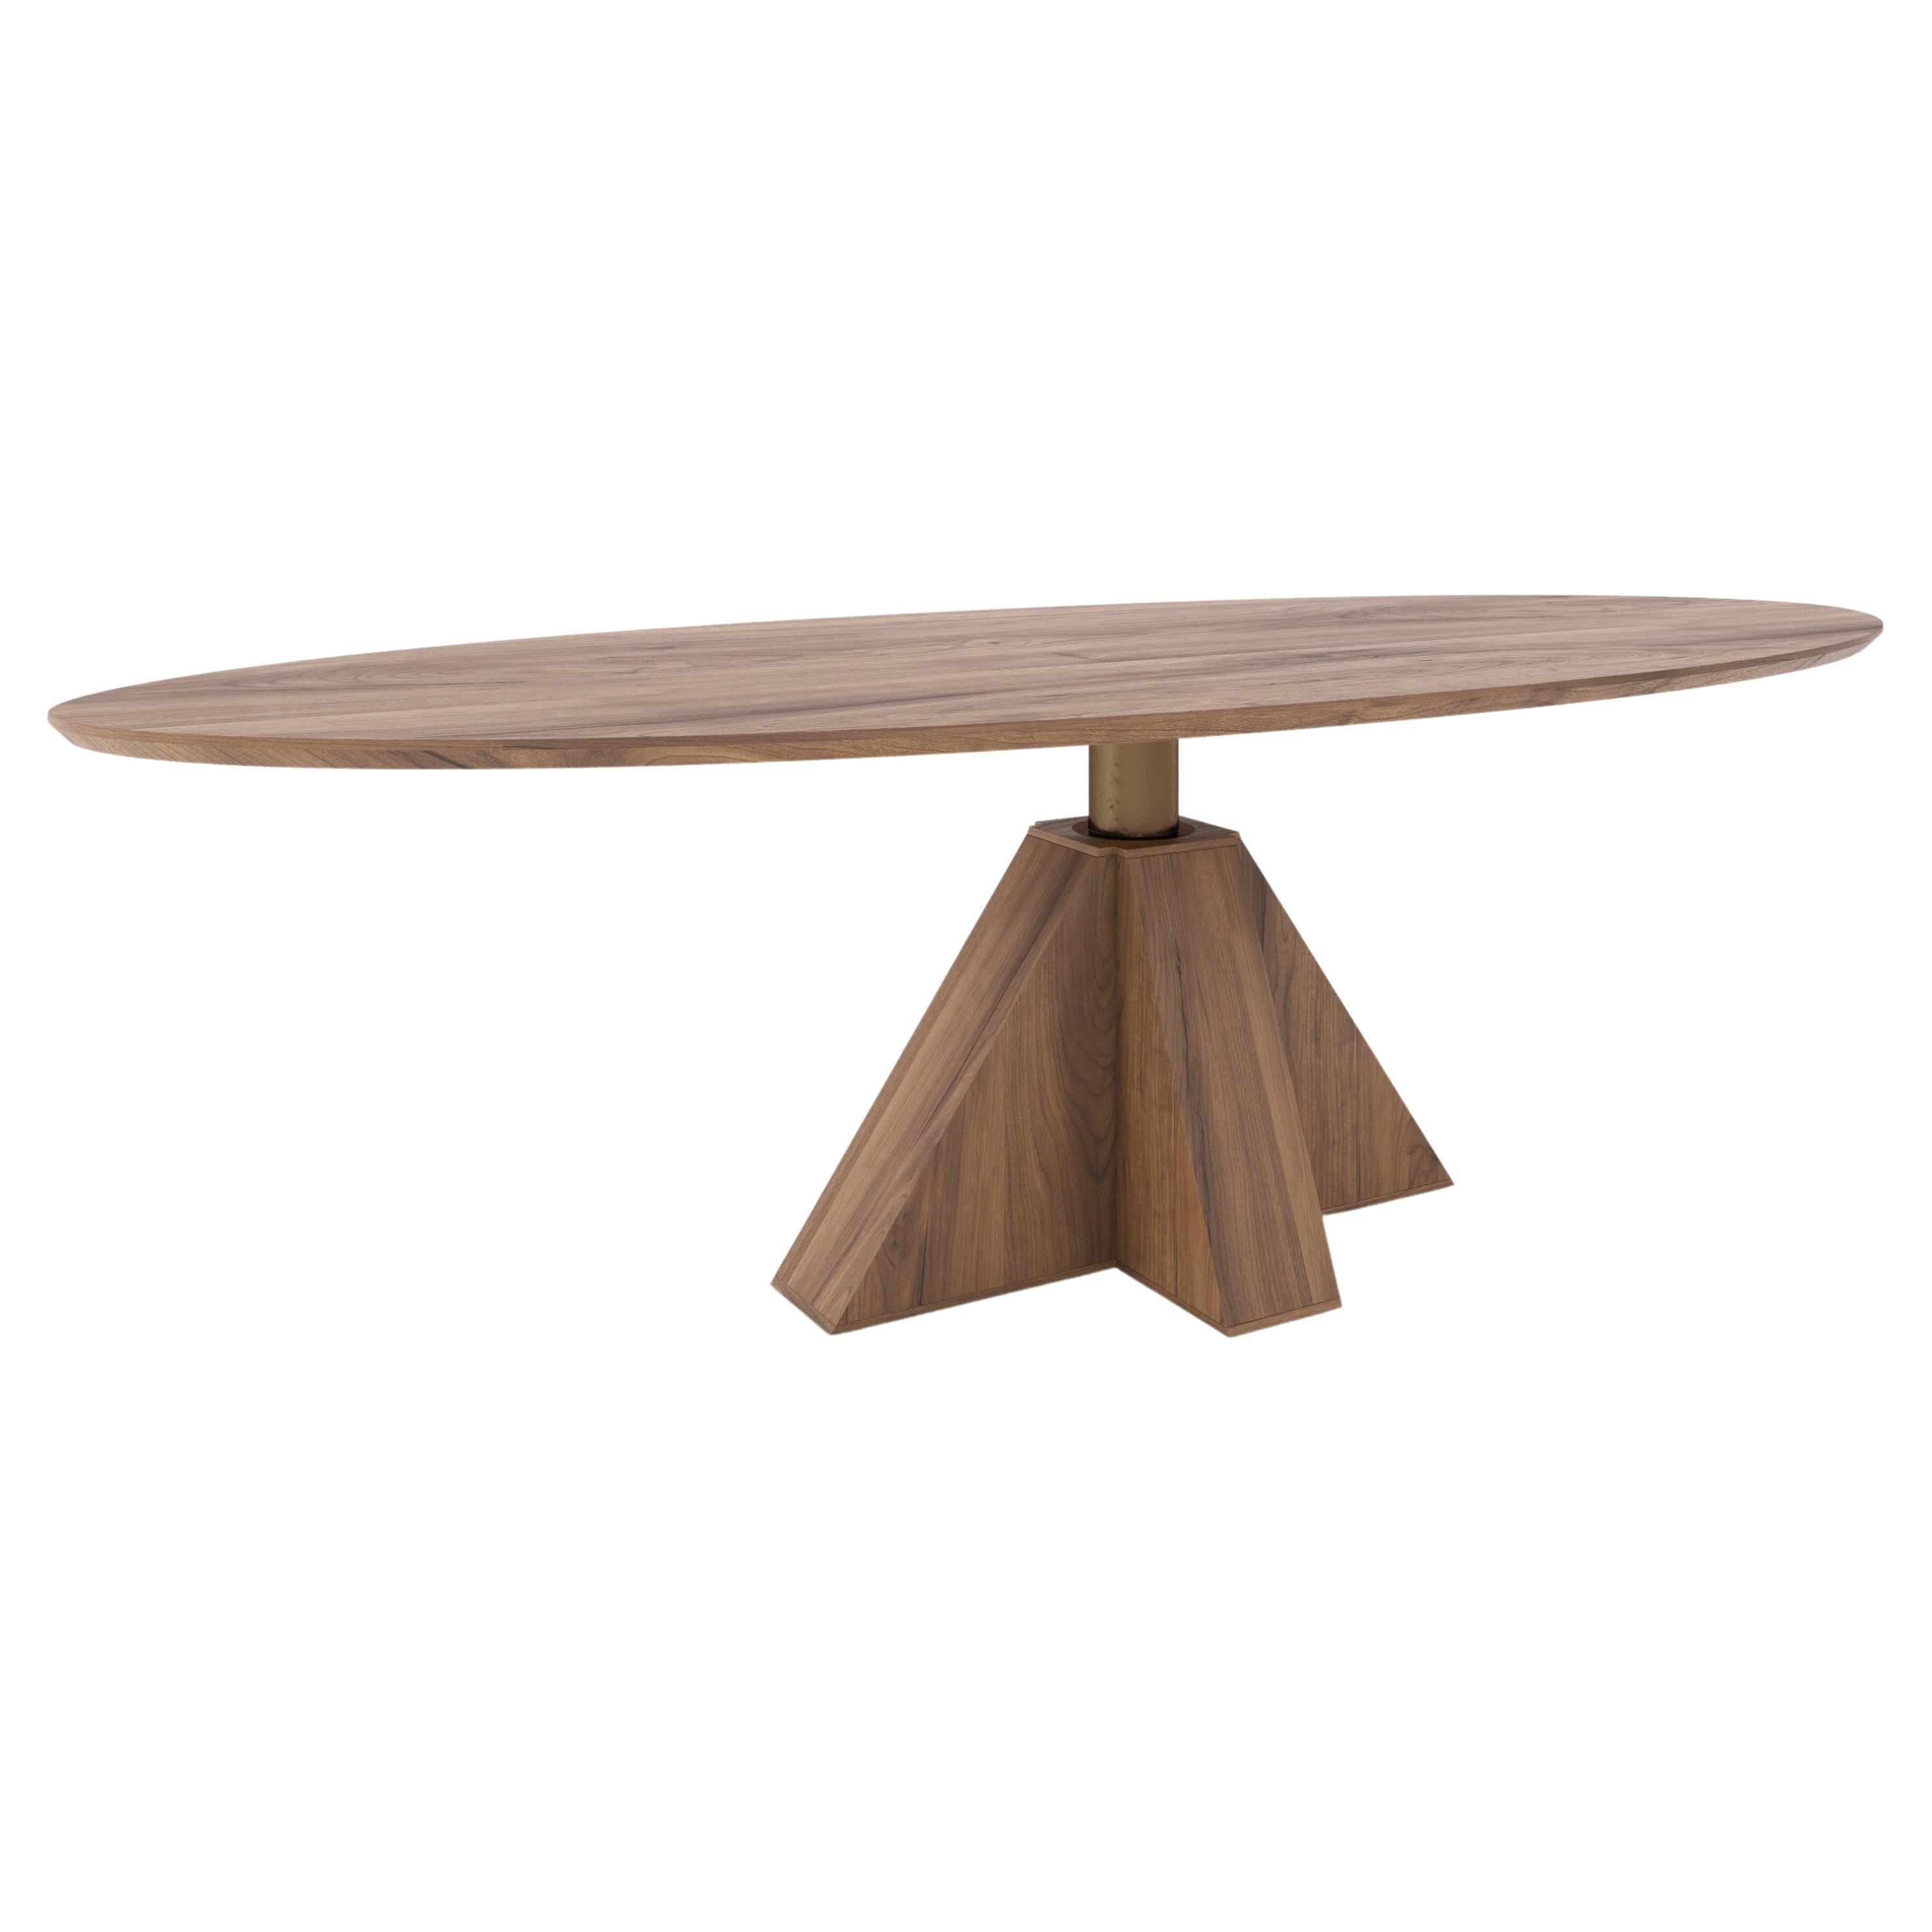 M-Oval Table by Daniel Boddam, 60" x 36", Walnut For Sale